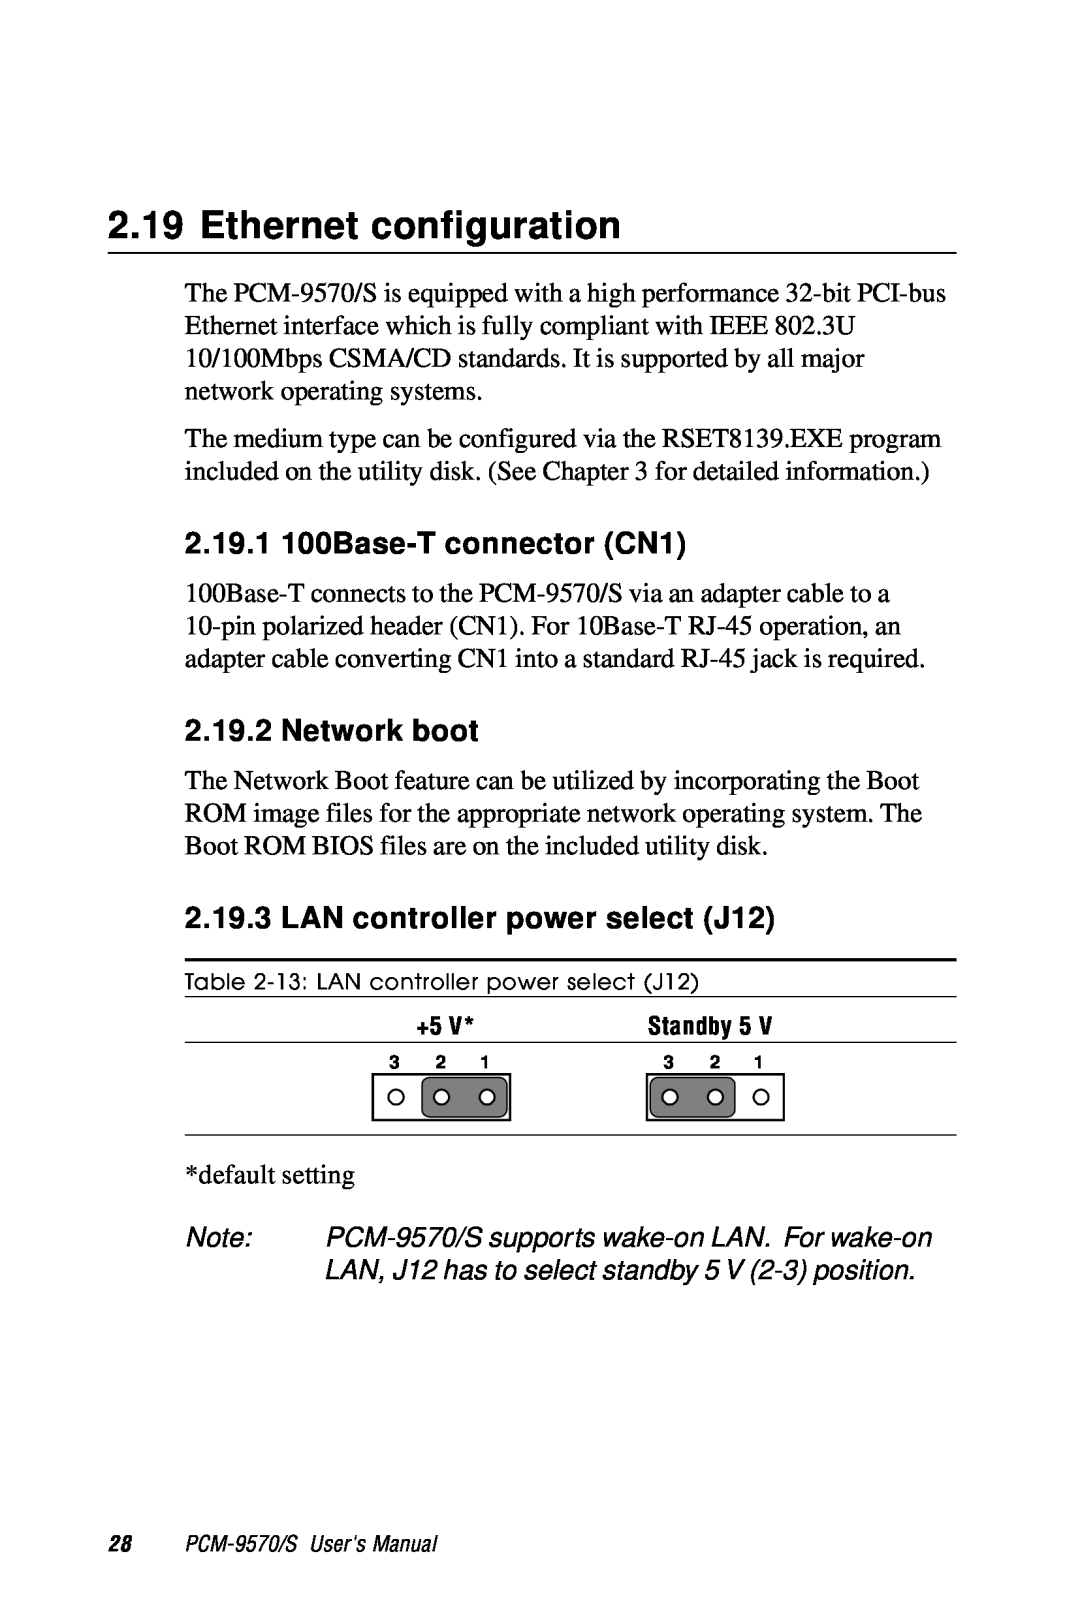 Advantech 2006957006 5th Edition user manual Ethernet configuration, 2.19.1 100Base-T connector CN1, Network boot 